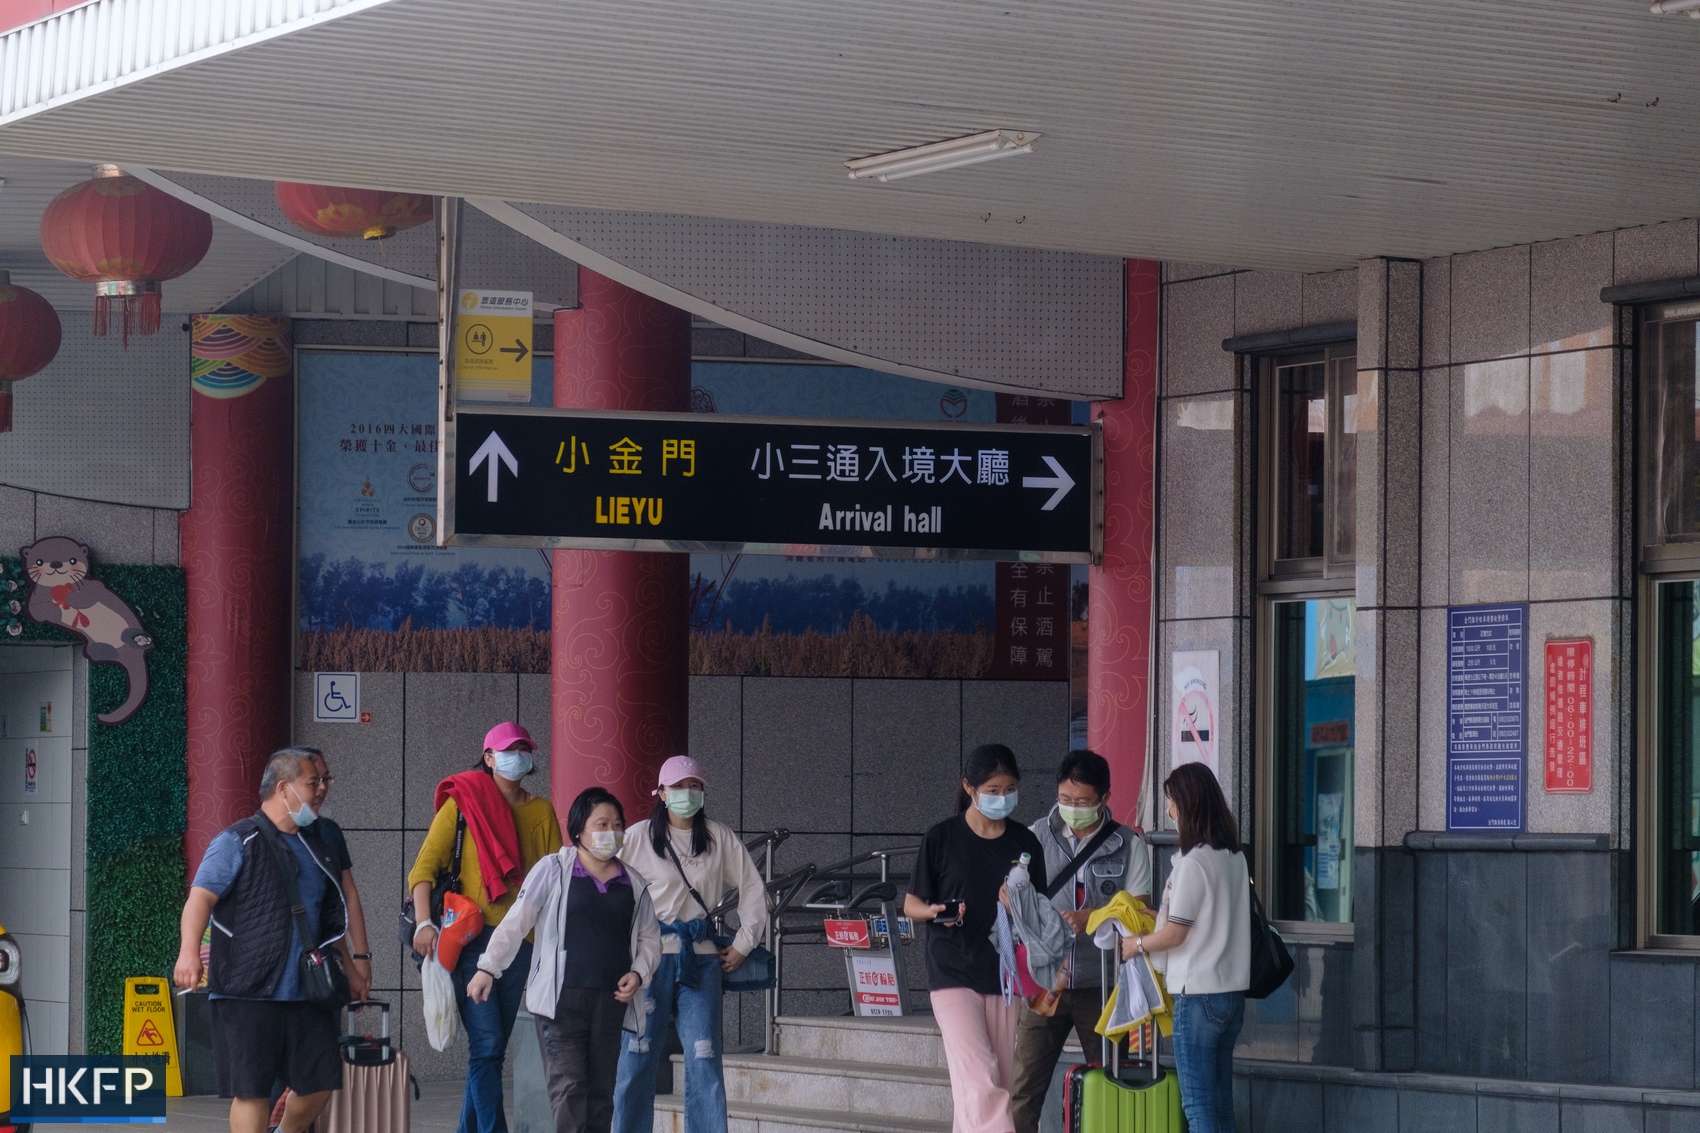 People arriving to Kinmen from Xiao Kinmen after leaving the ferry, Kinmen, Taiwan. November 20, 2021. Photo: Walid Berrazeg/HKFP.